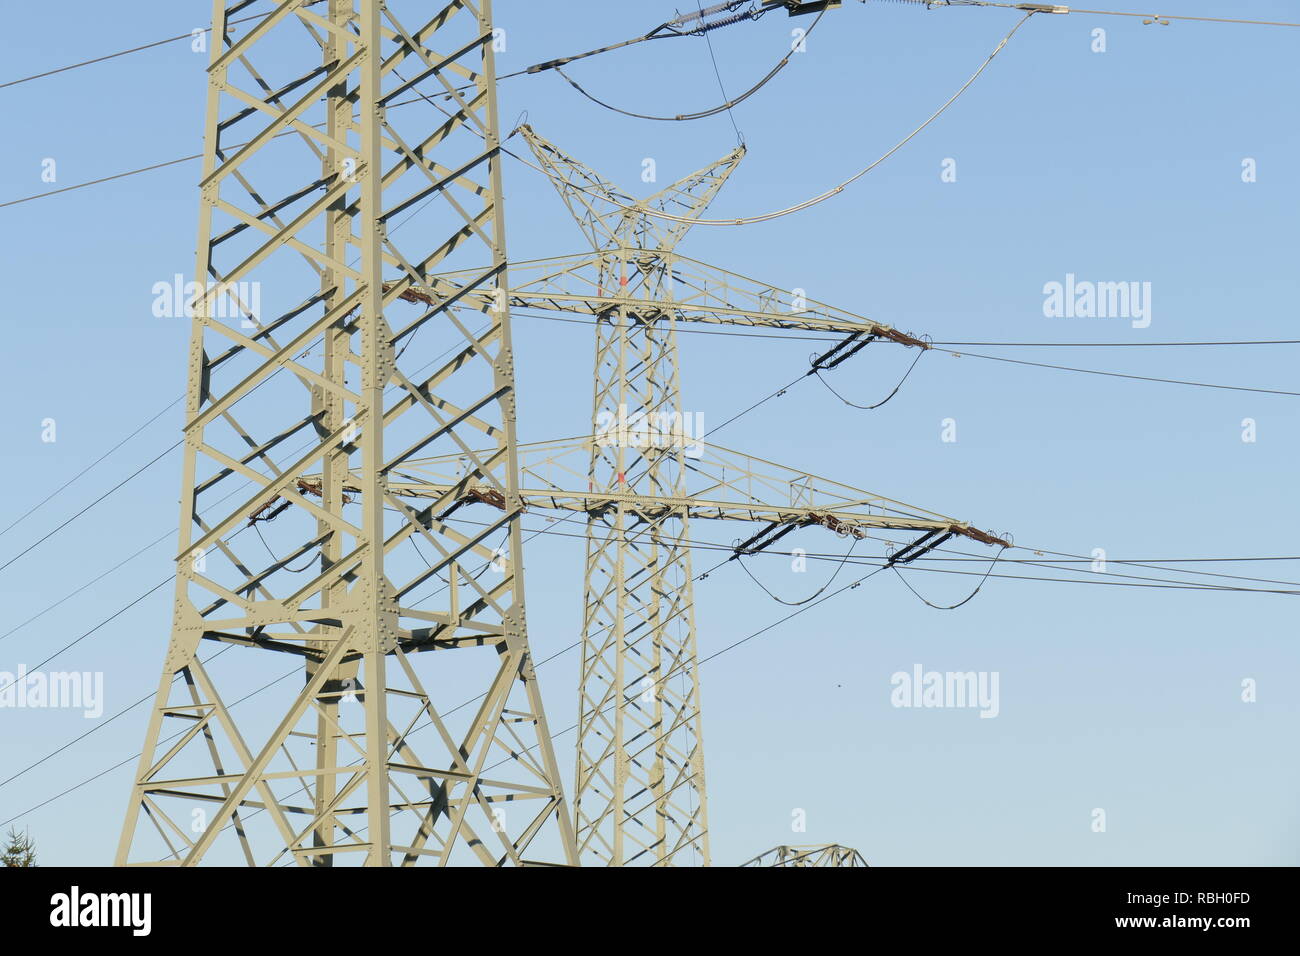 Electricity pylons, Germany, Europe Stock Photo